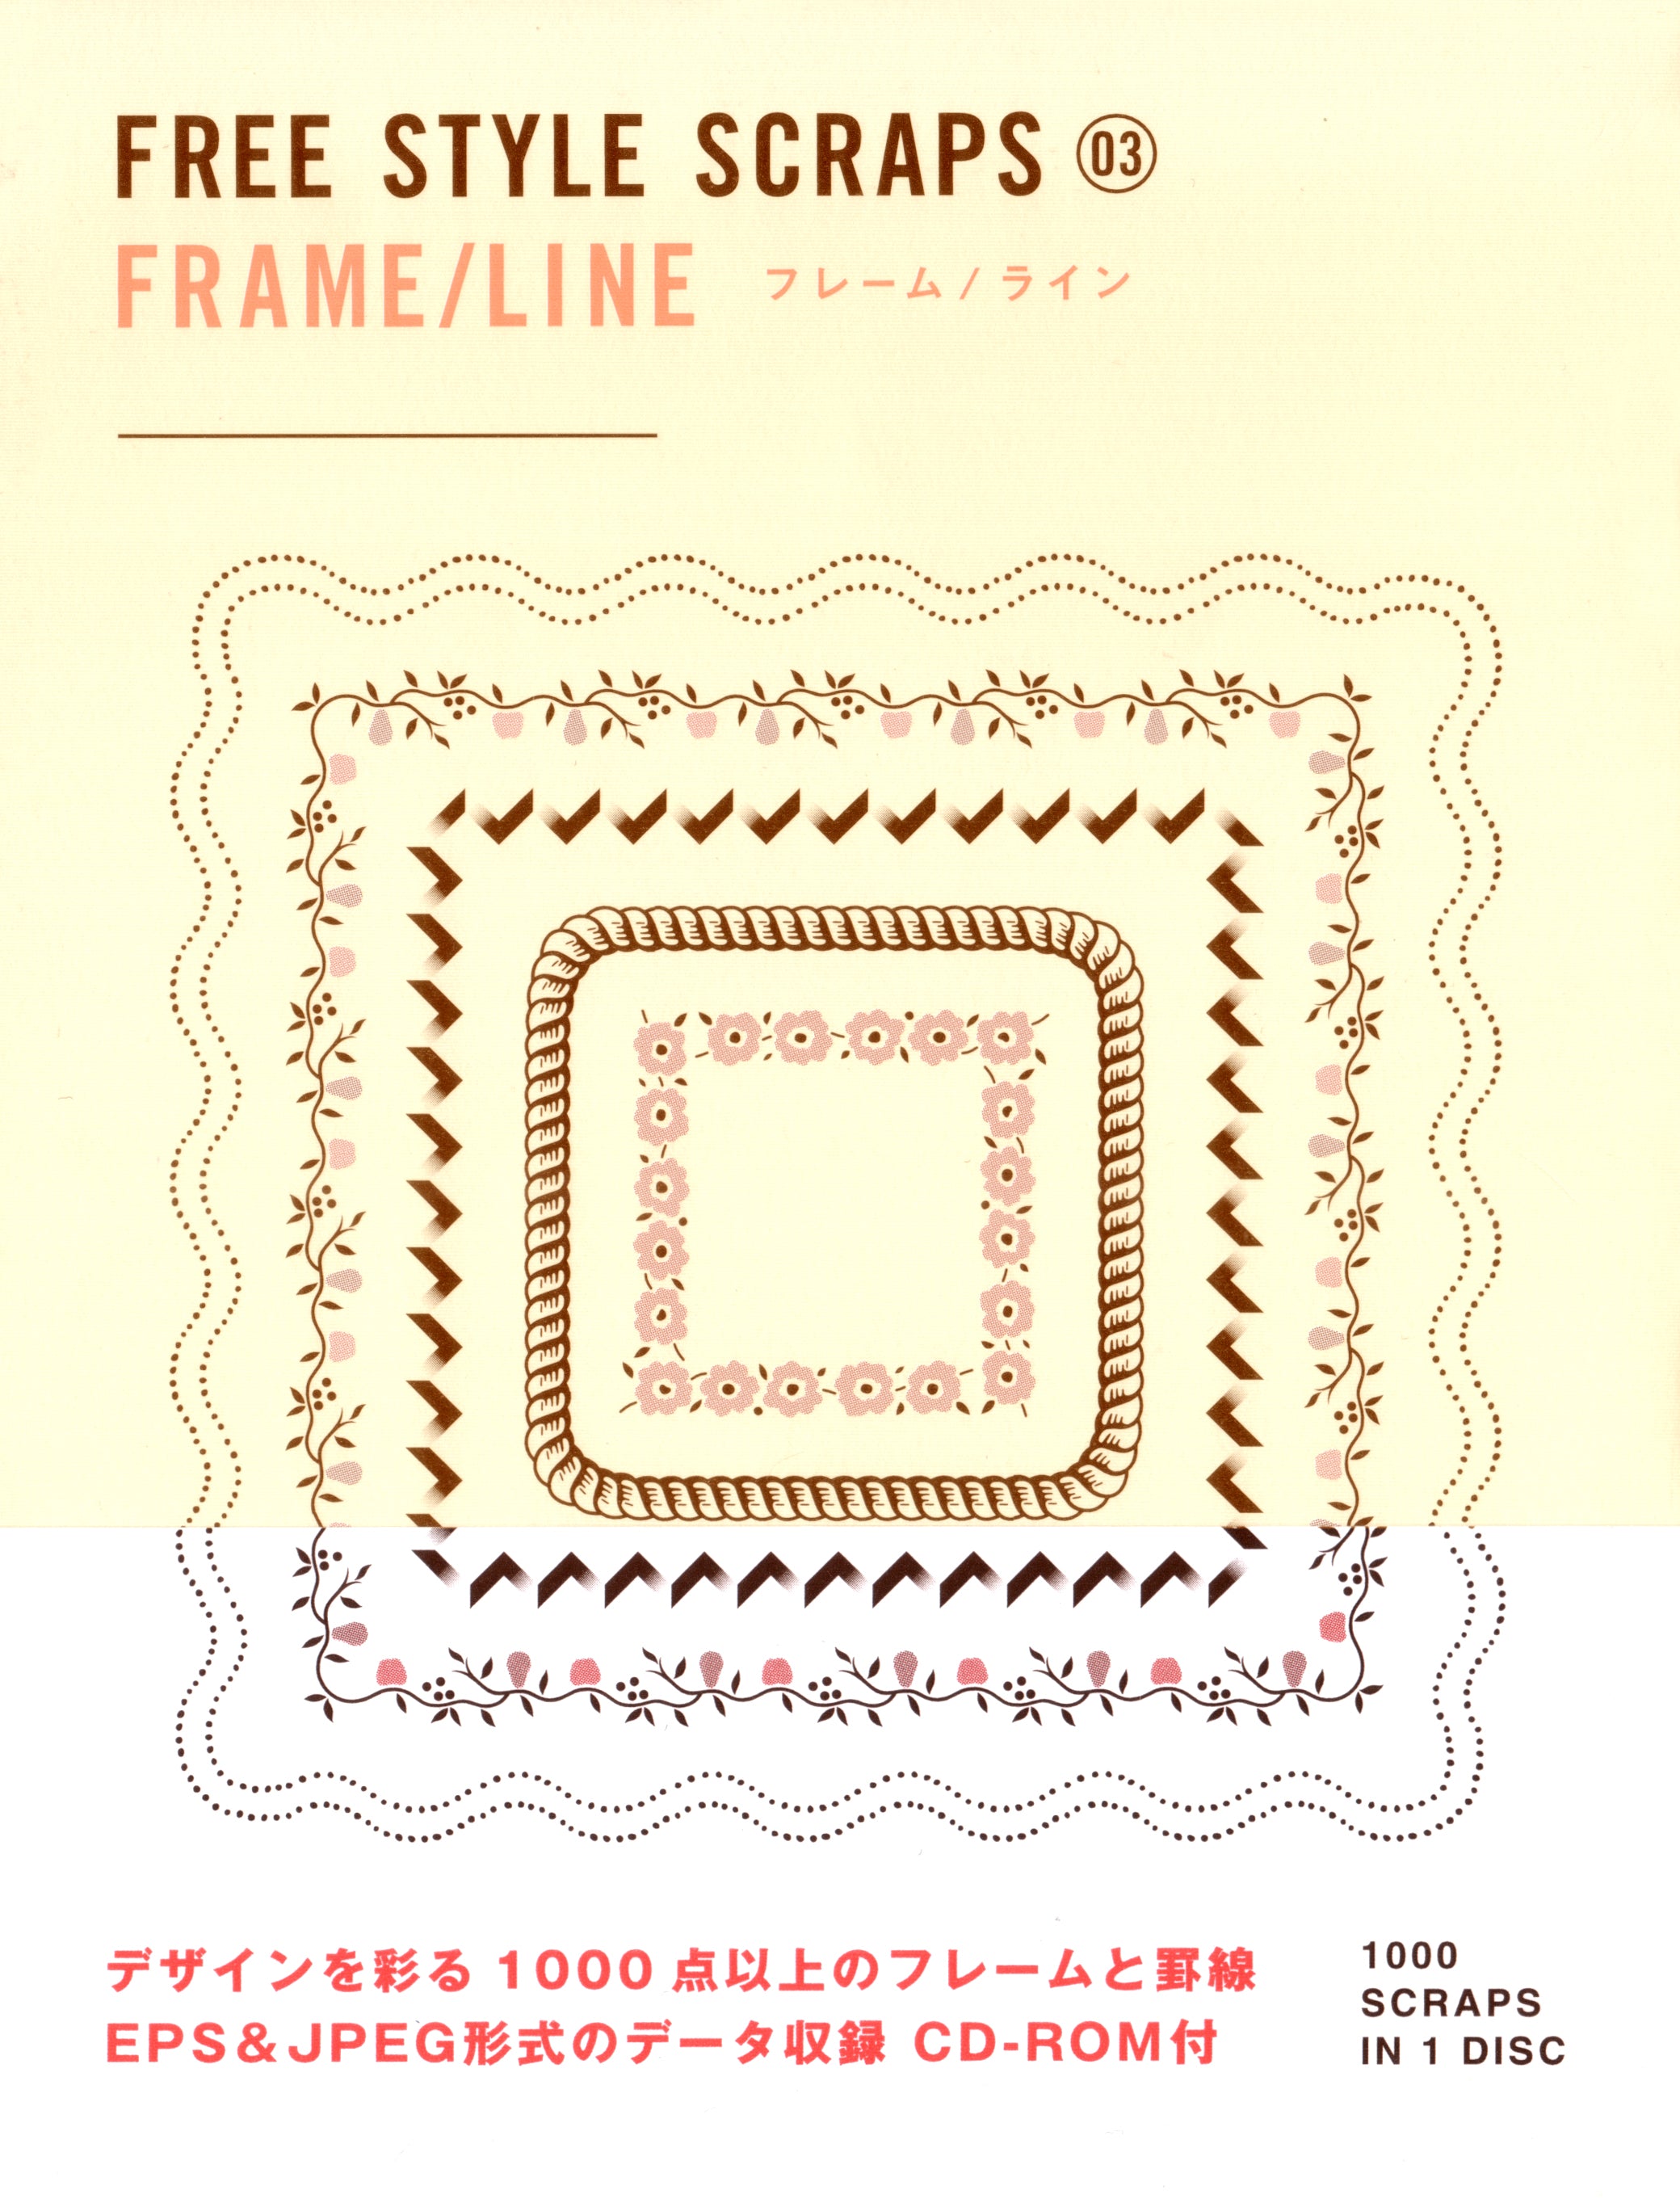 FREE STYLE SCRAPS 03 FRAME/LINE フレーム・ライン | 株式会社ビー